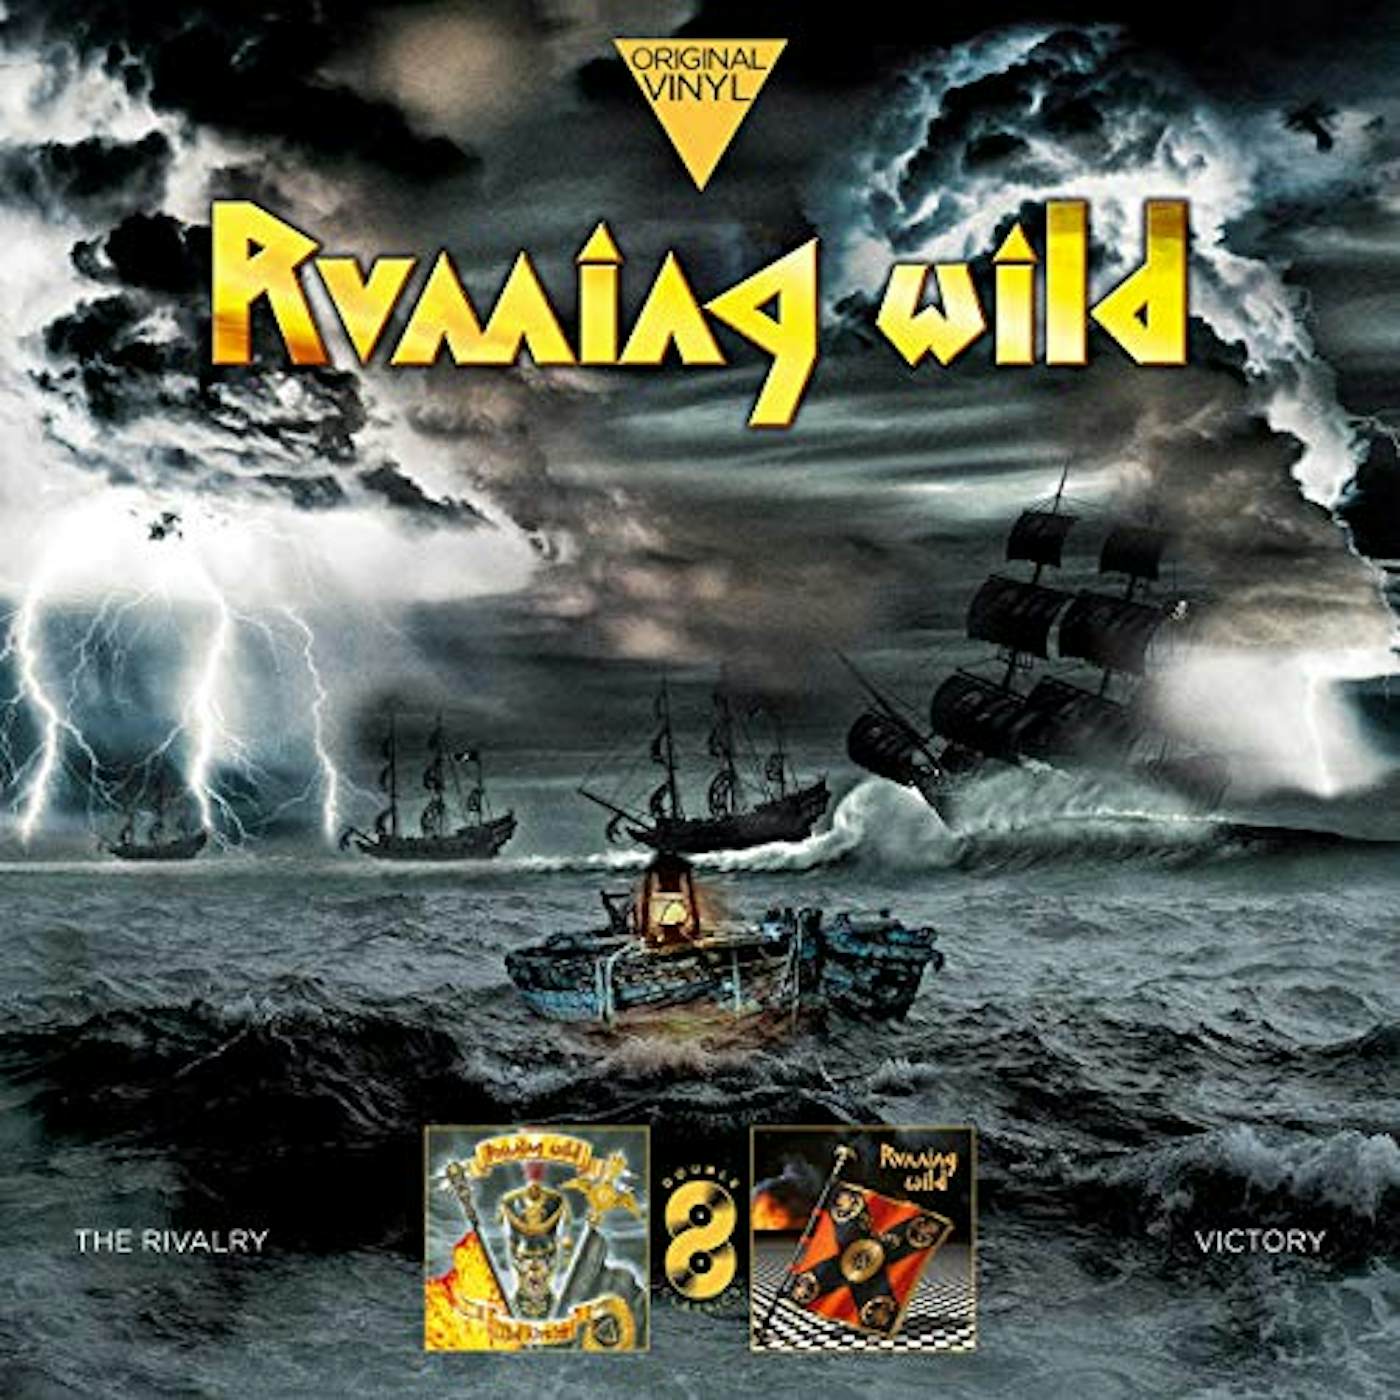 Running Wild ORIGINAL VINYL CLASSICS Vinyl Record